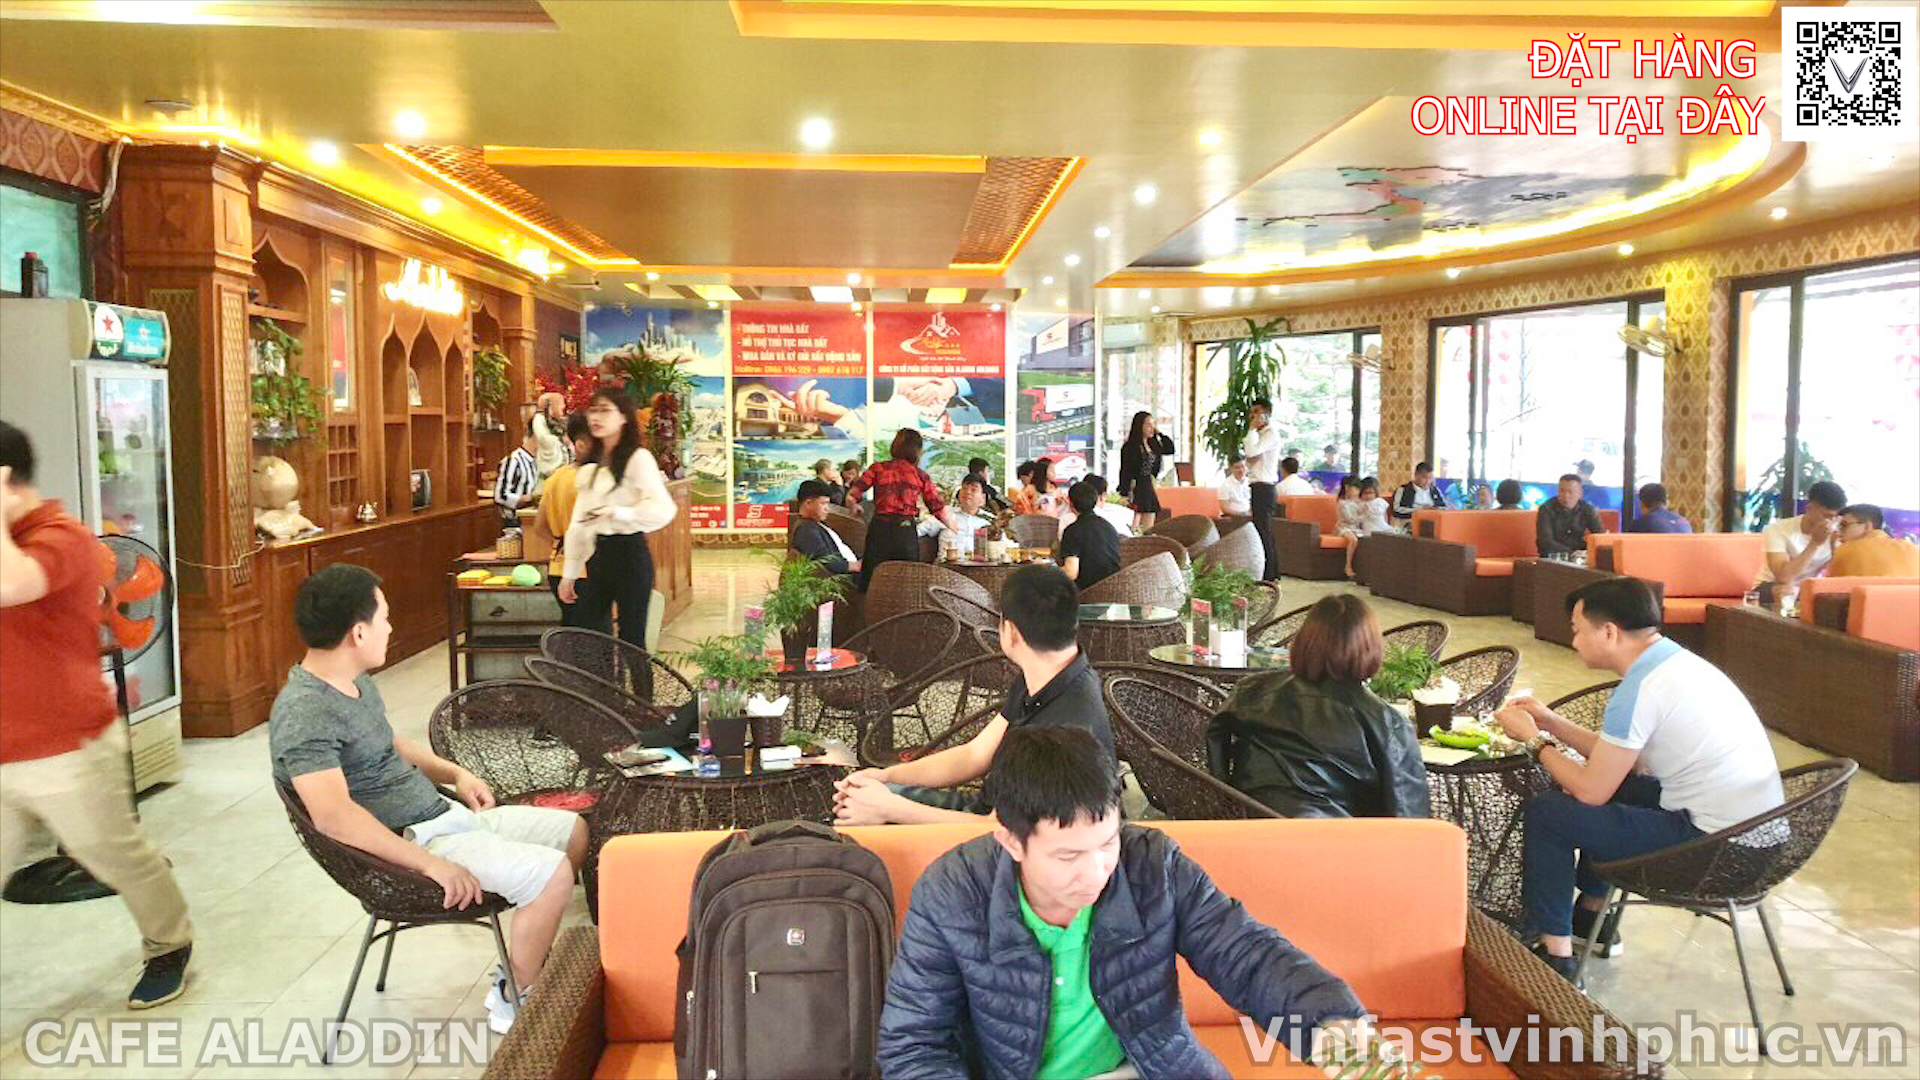 Cafe Aladdin Chuong Trinh Lai Thu Xe Vinfast Vinh Phuc (11)